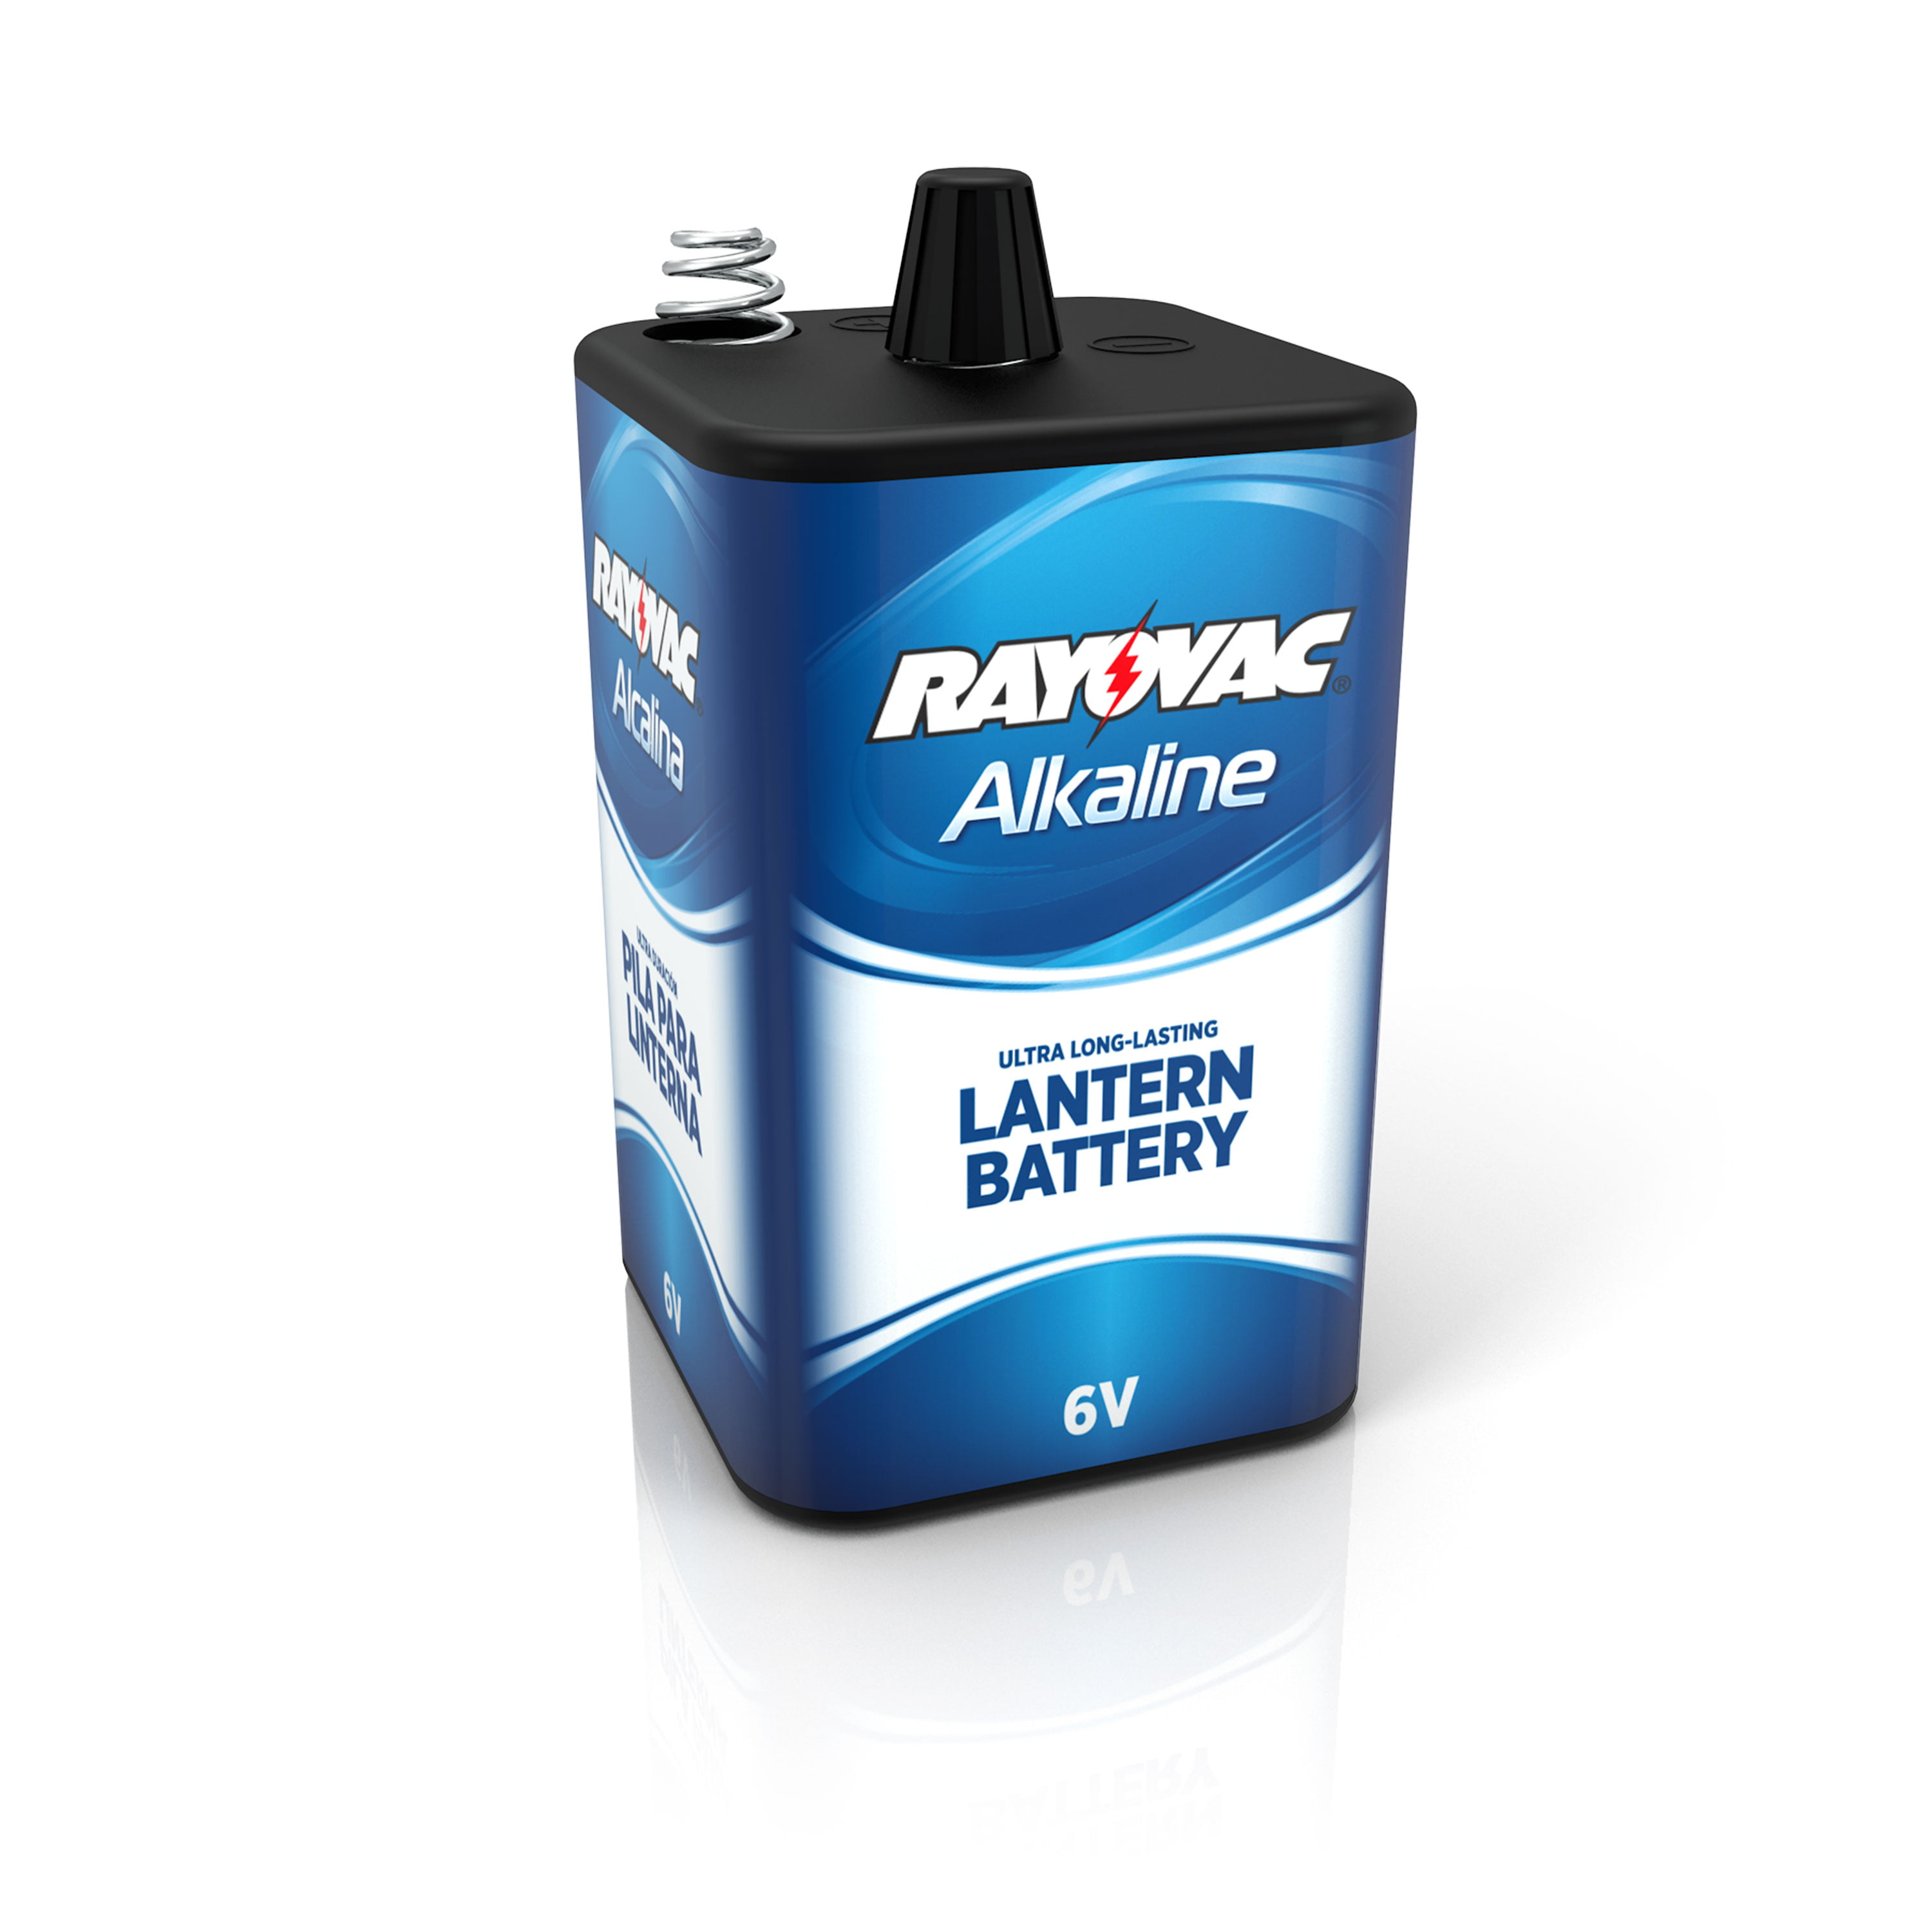 Rayovac 6V General Purpose Lantern Battery, 1.195 Pound